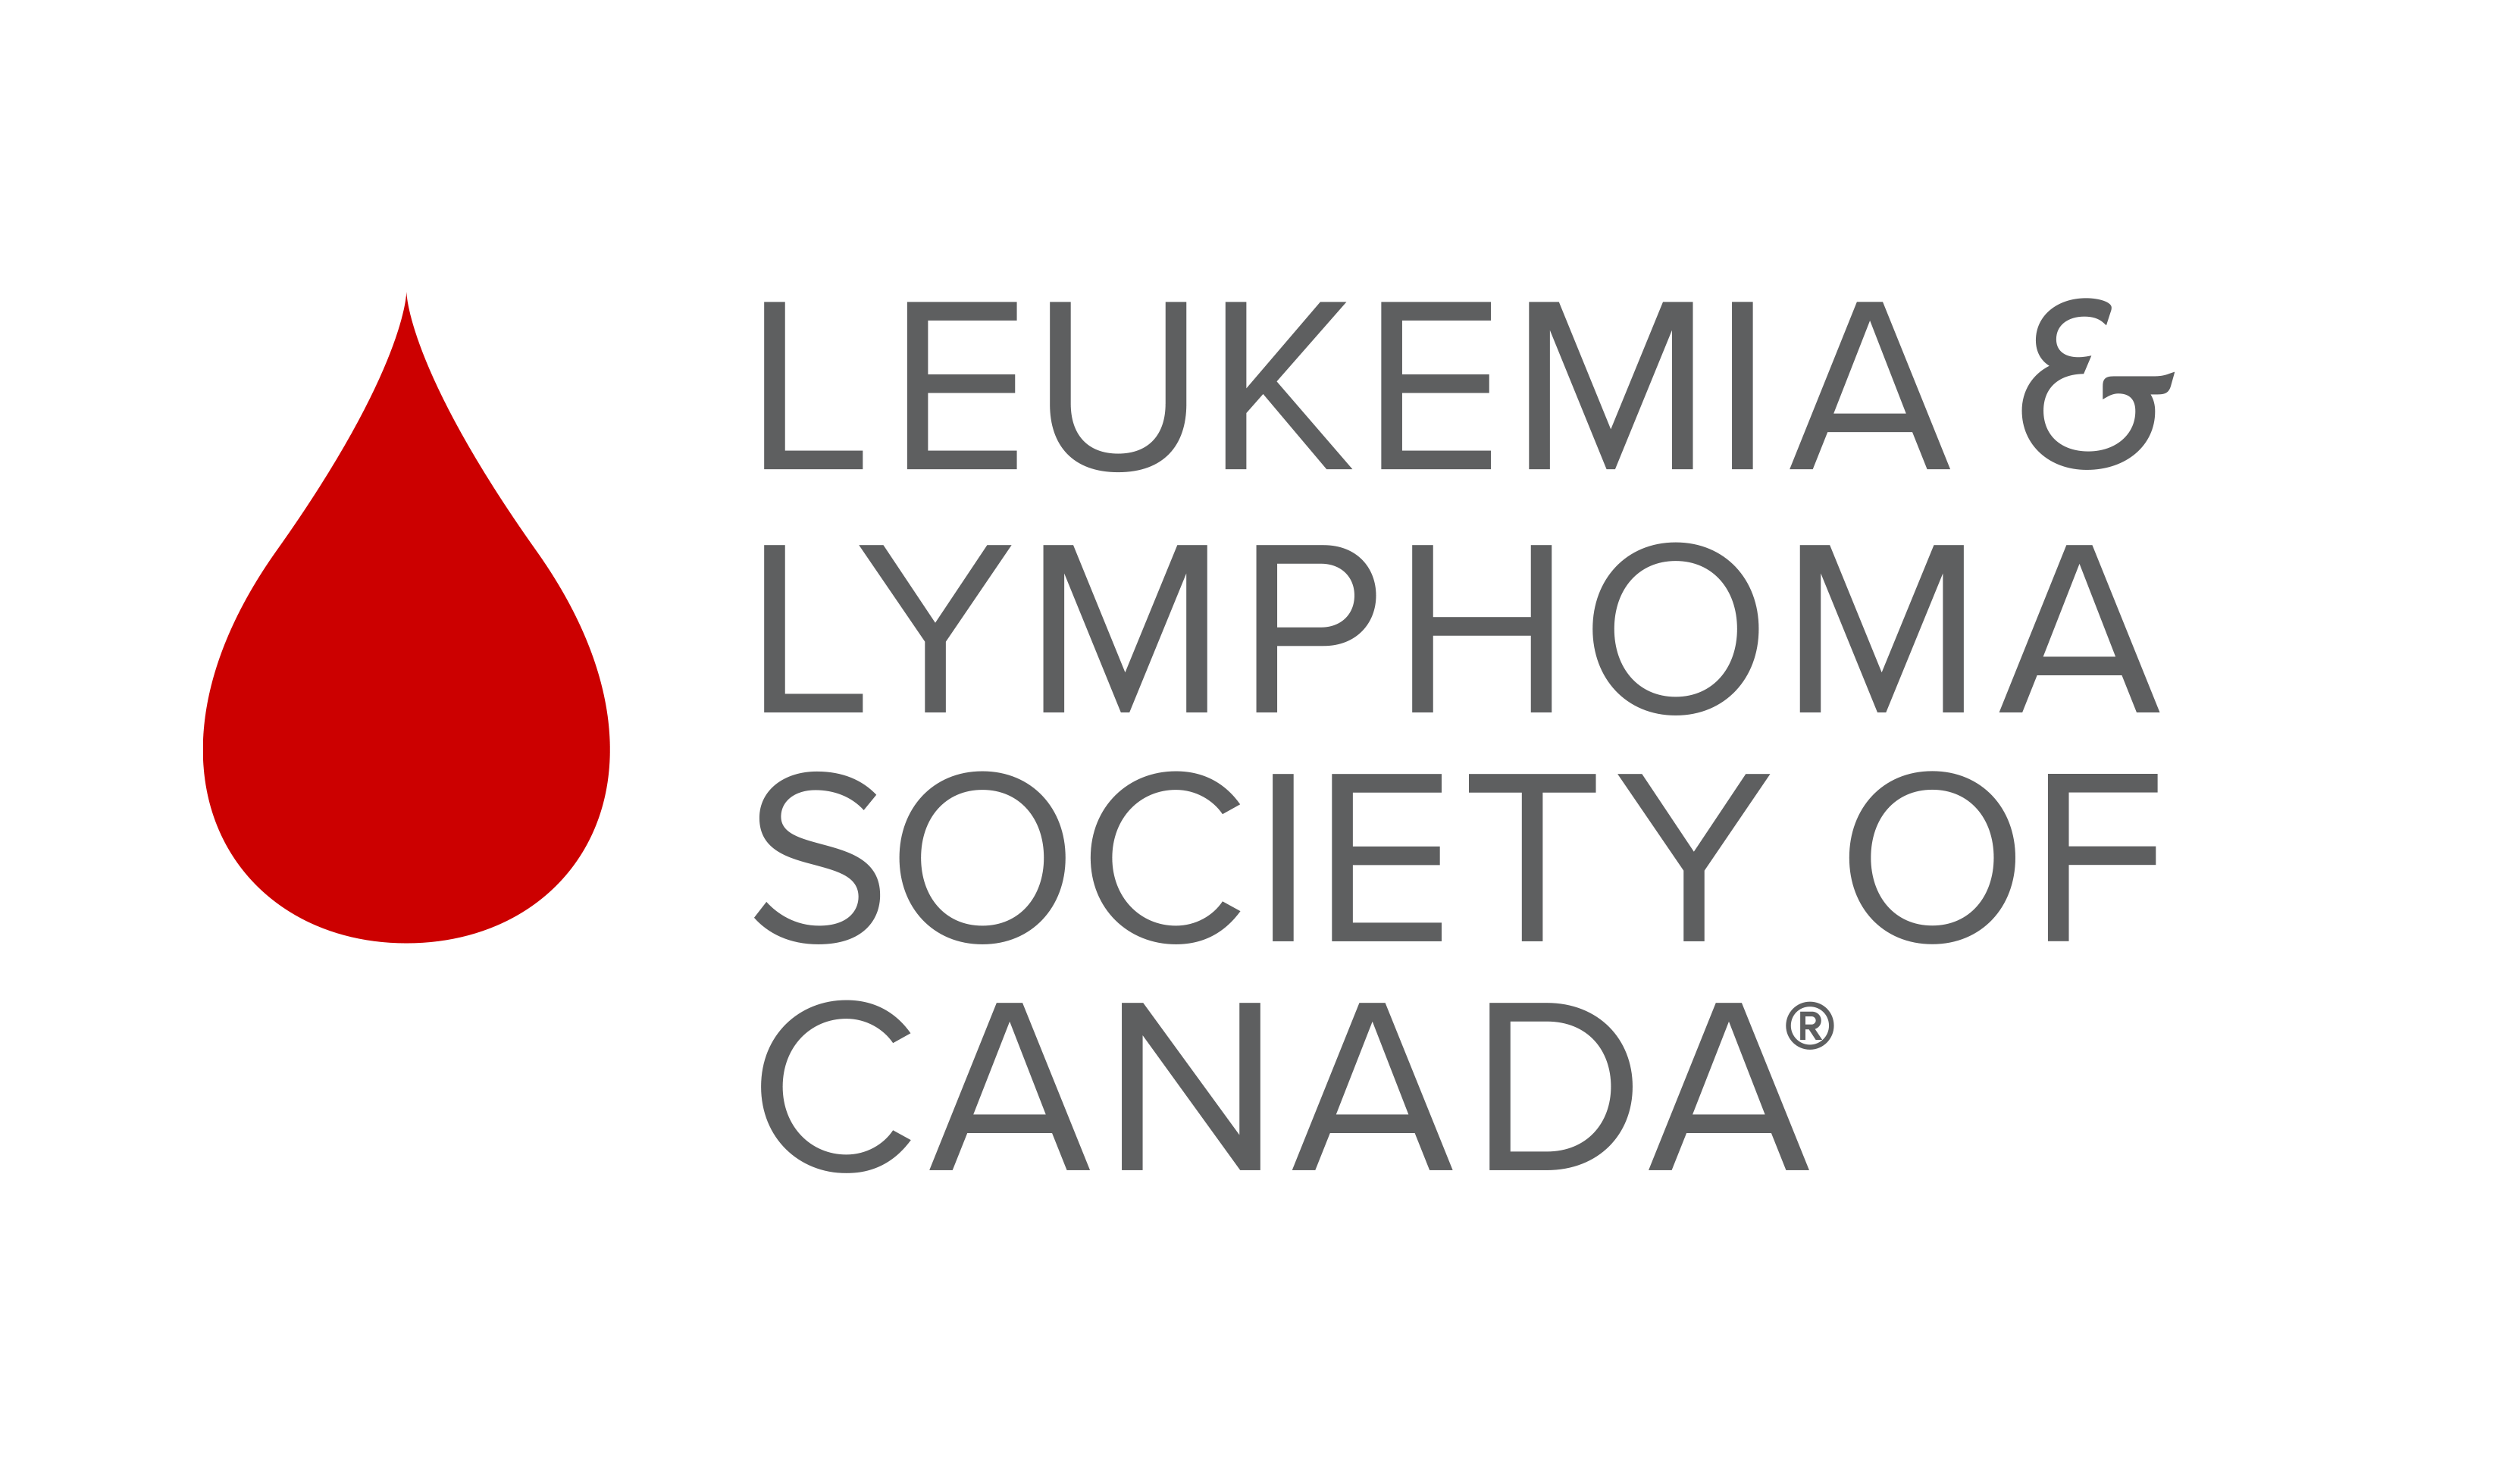 THE LEUKEMIA & LYMPHOMA SOCIETY OF CANADA/SOCIETE DE LEUCEMIE & LYMPHOME DU CANADA